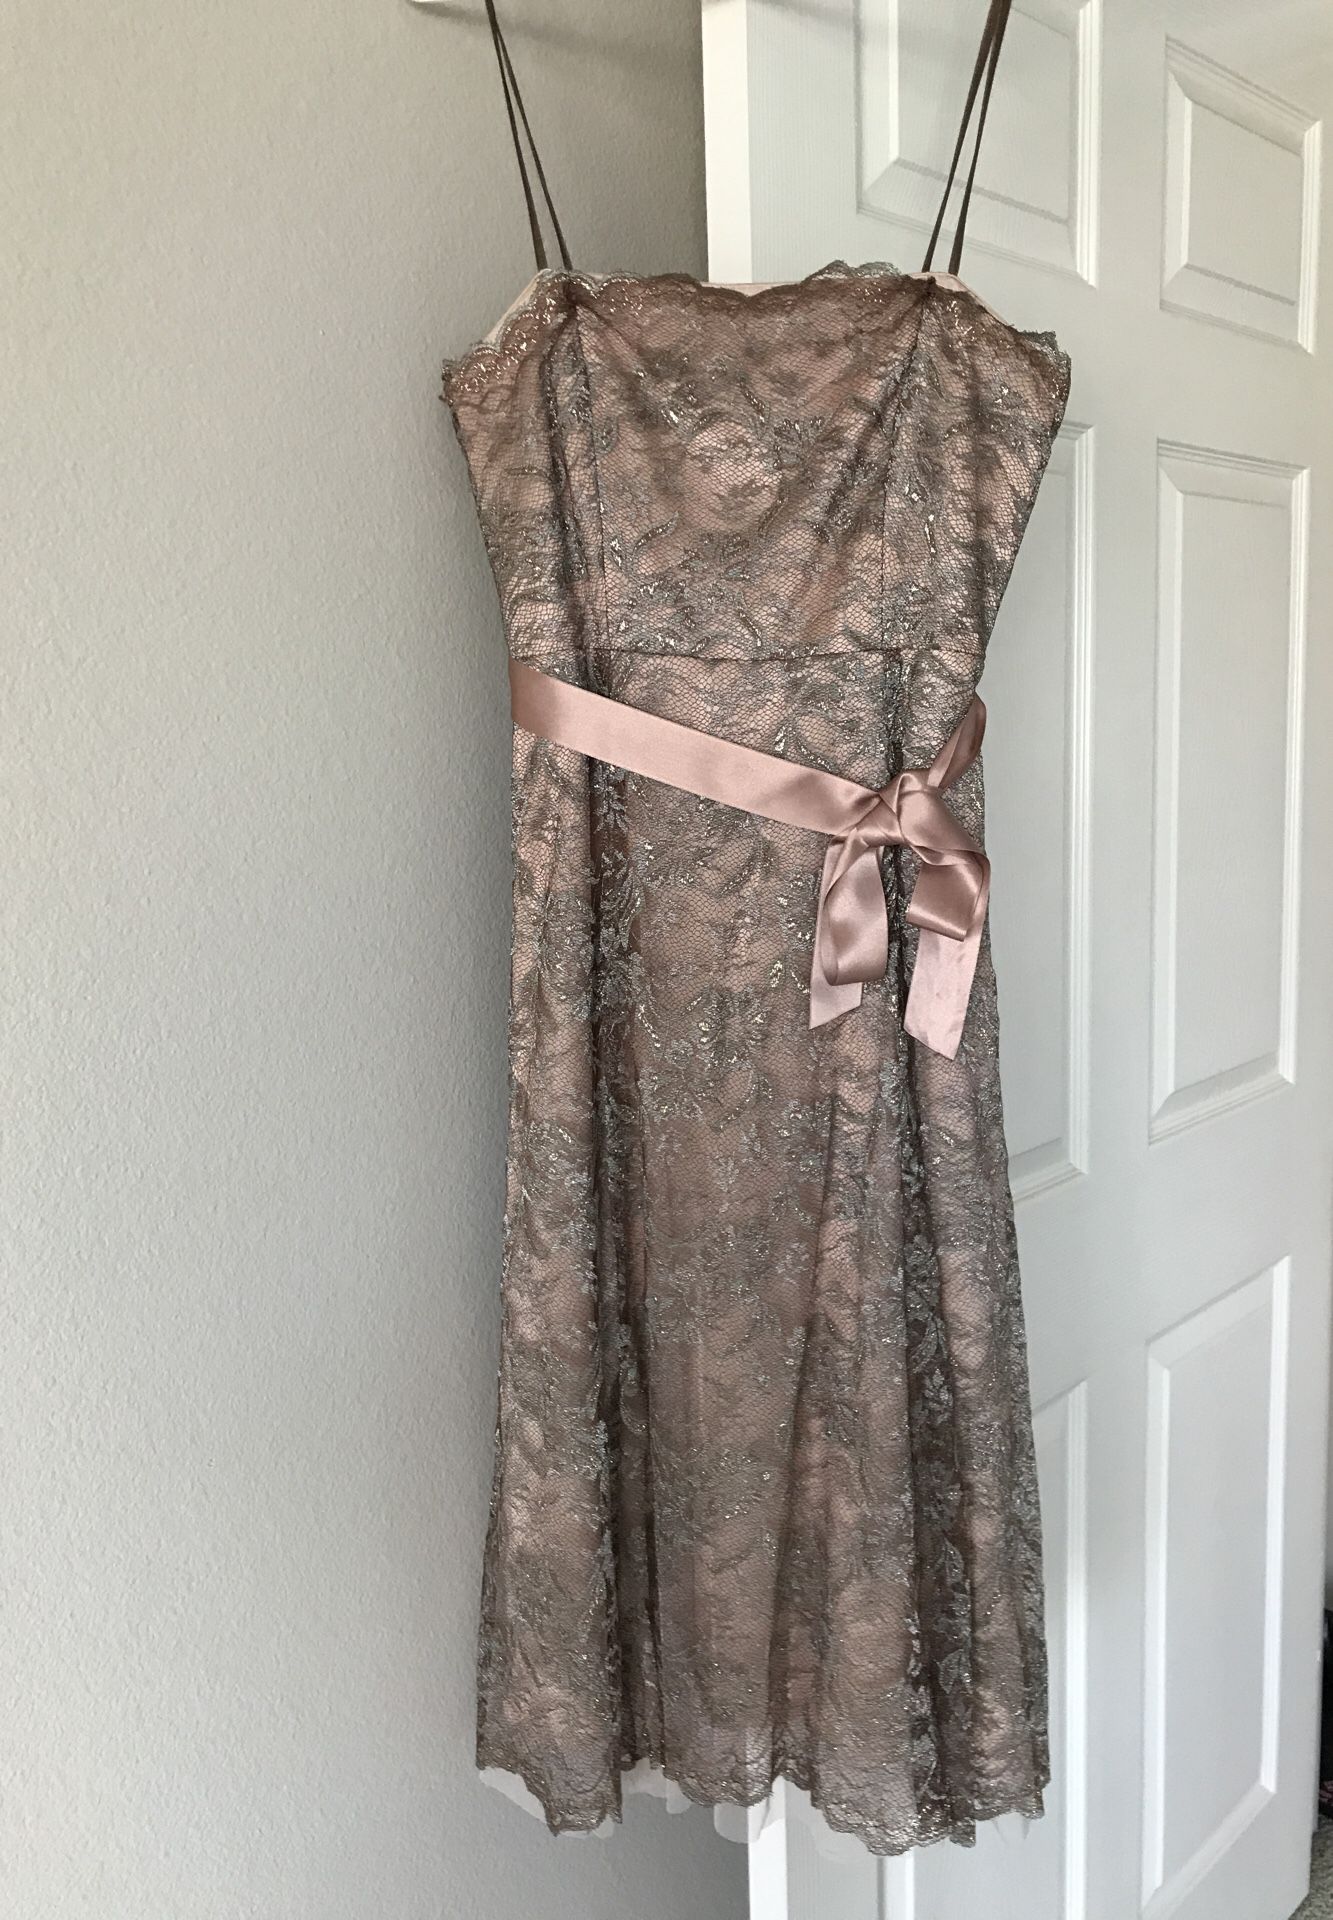 Junior dress Blush pink Designer Dress strapless BCBG (size 4)